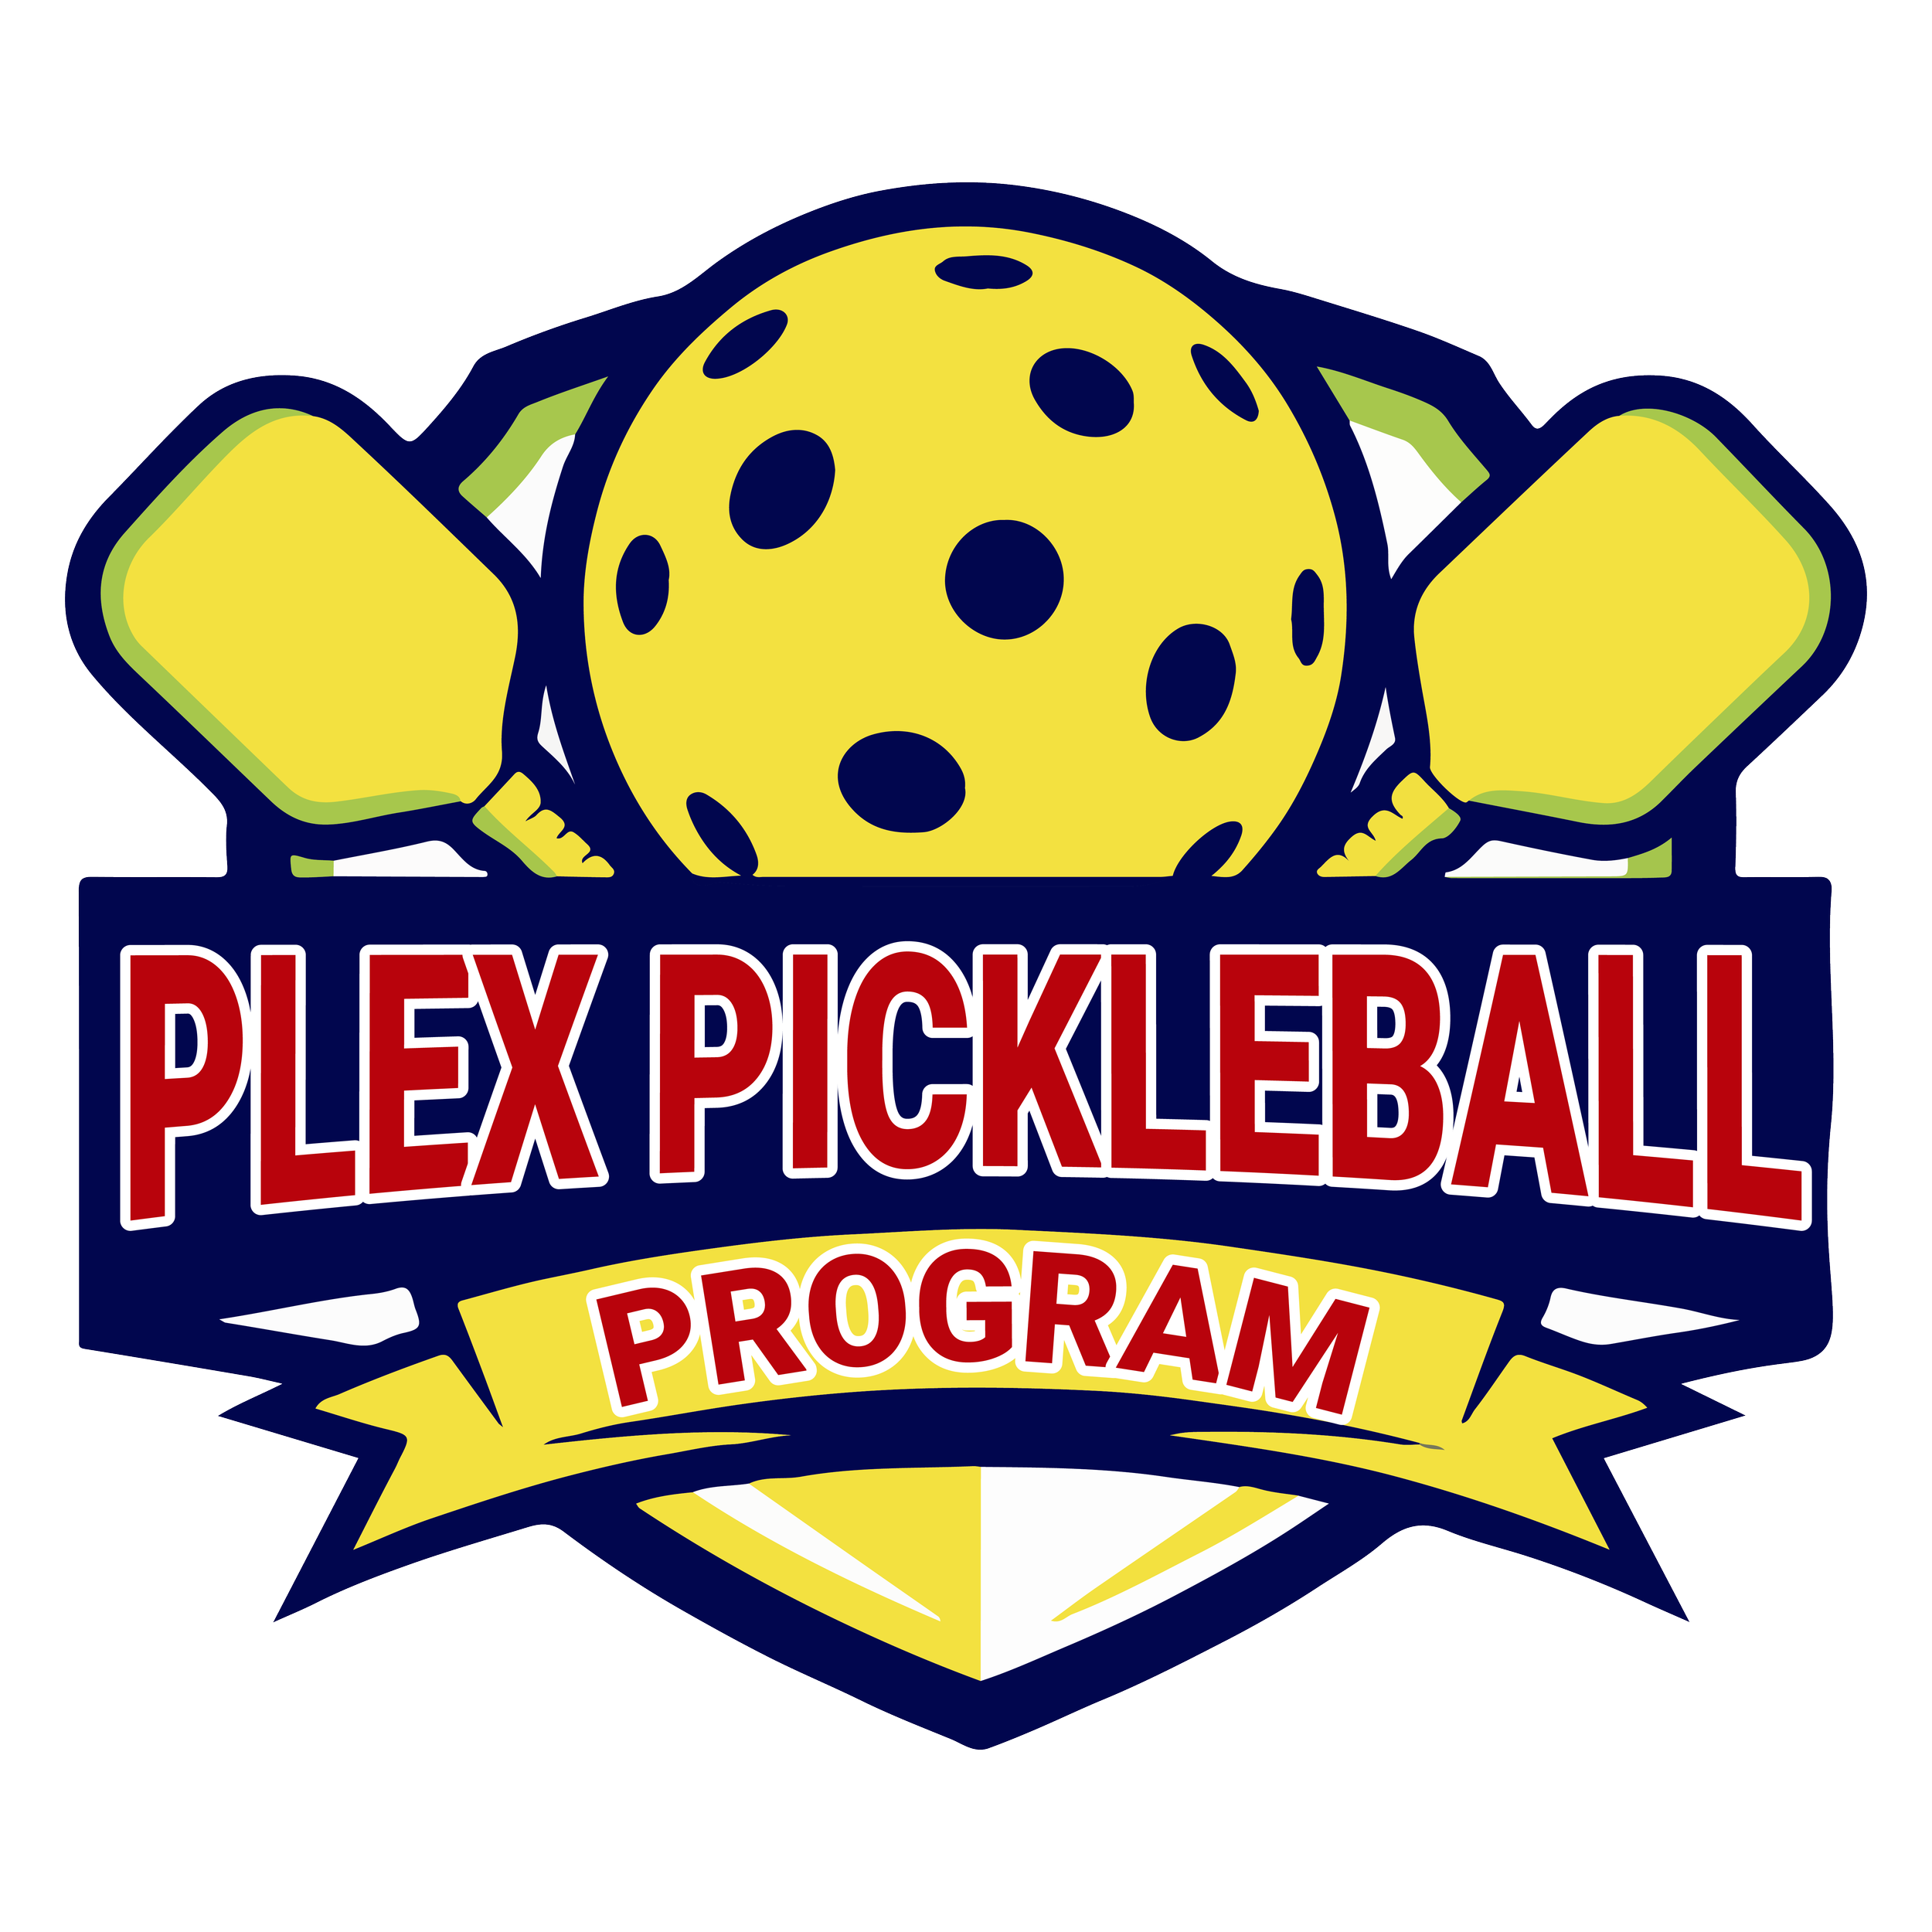 PLEX PICKLEBALL PROGRAM-01.png